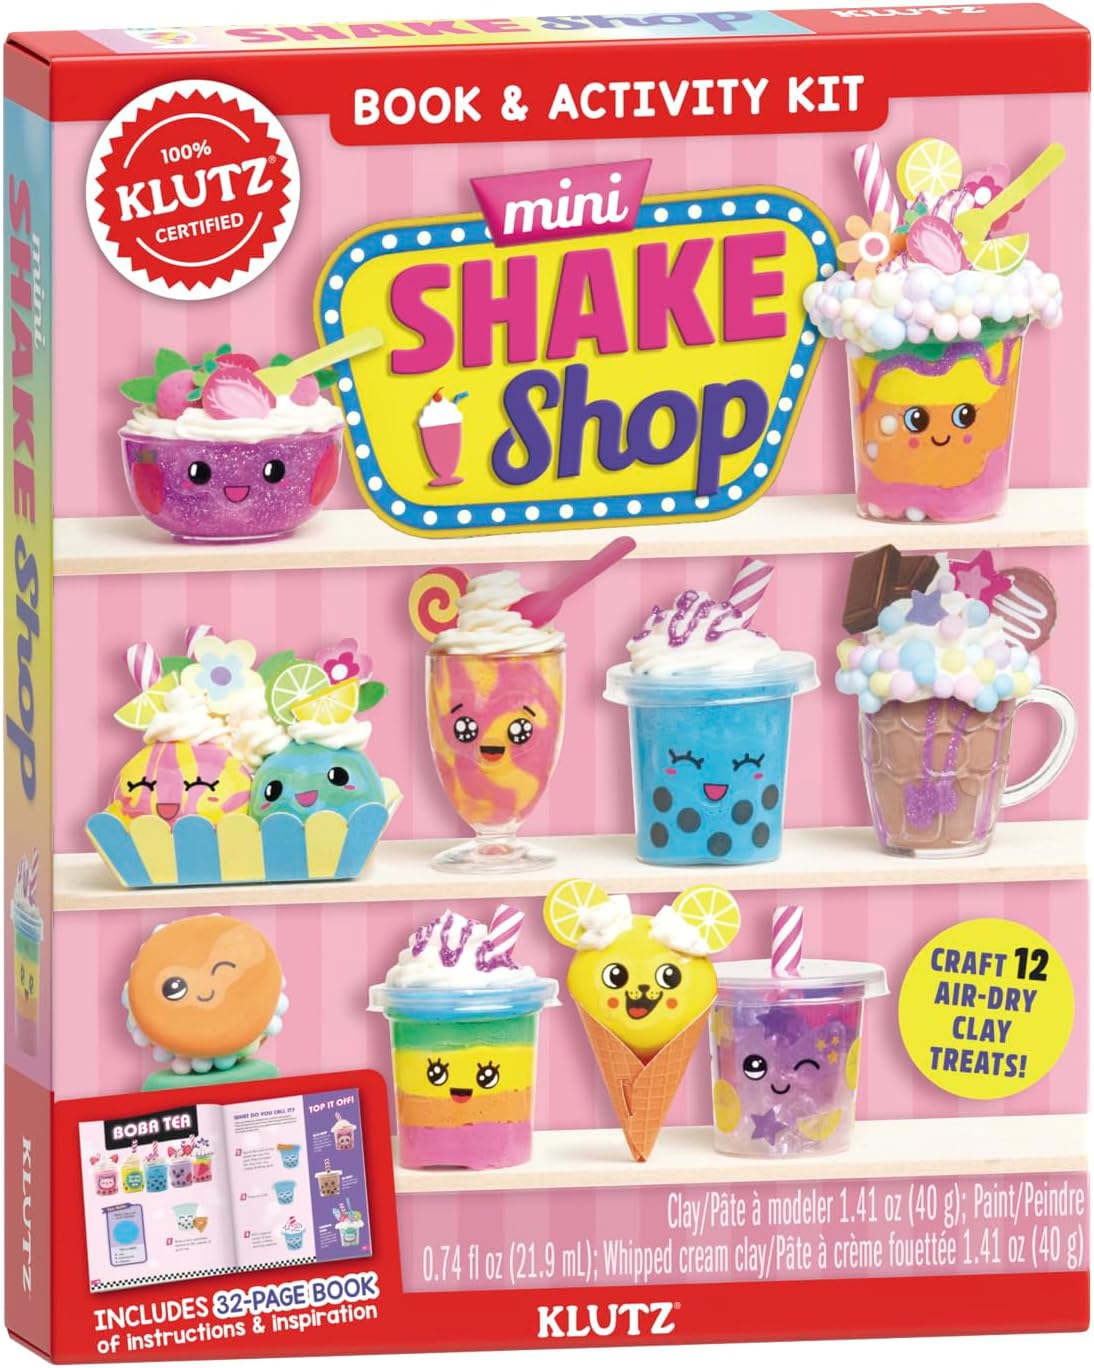 Mini Shake Shop